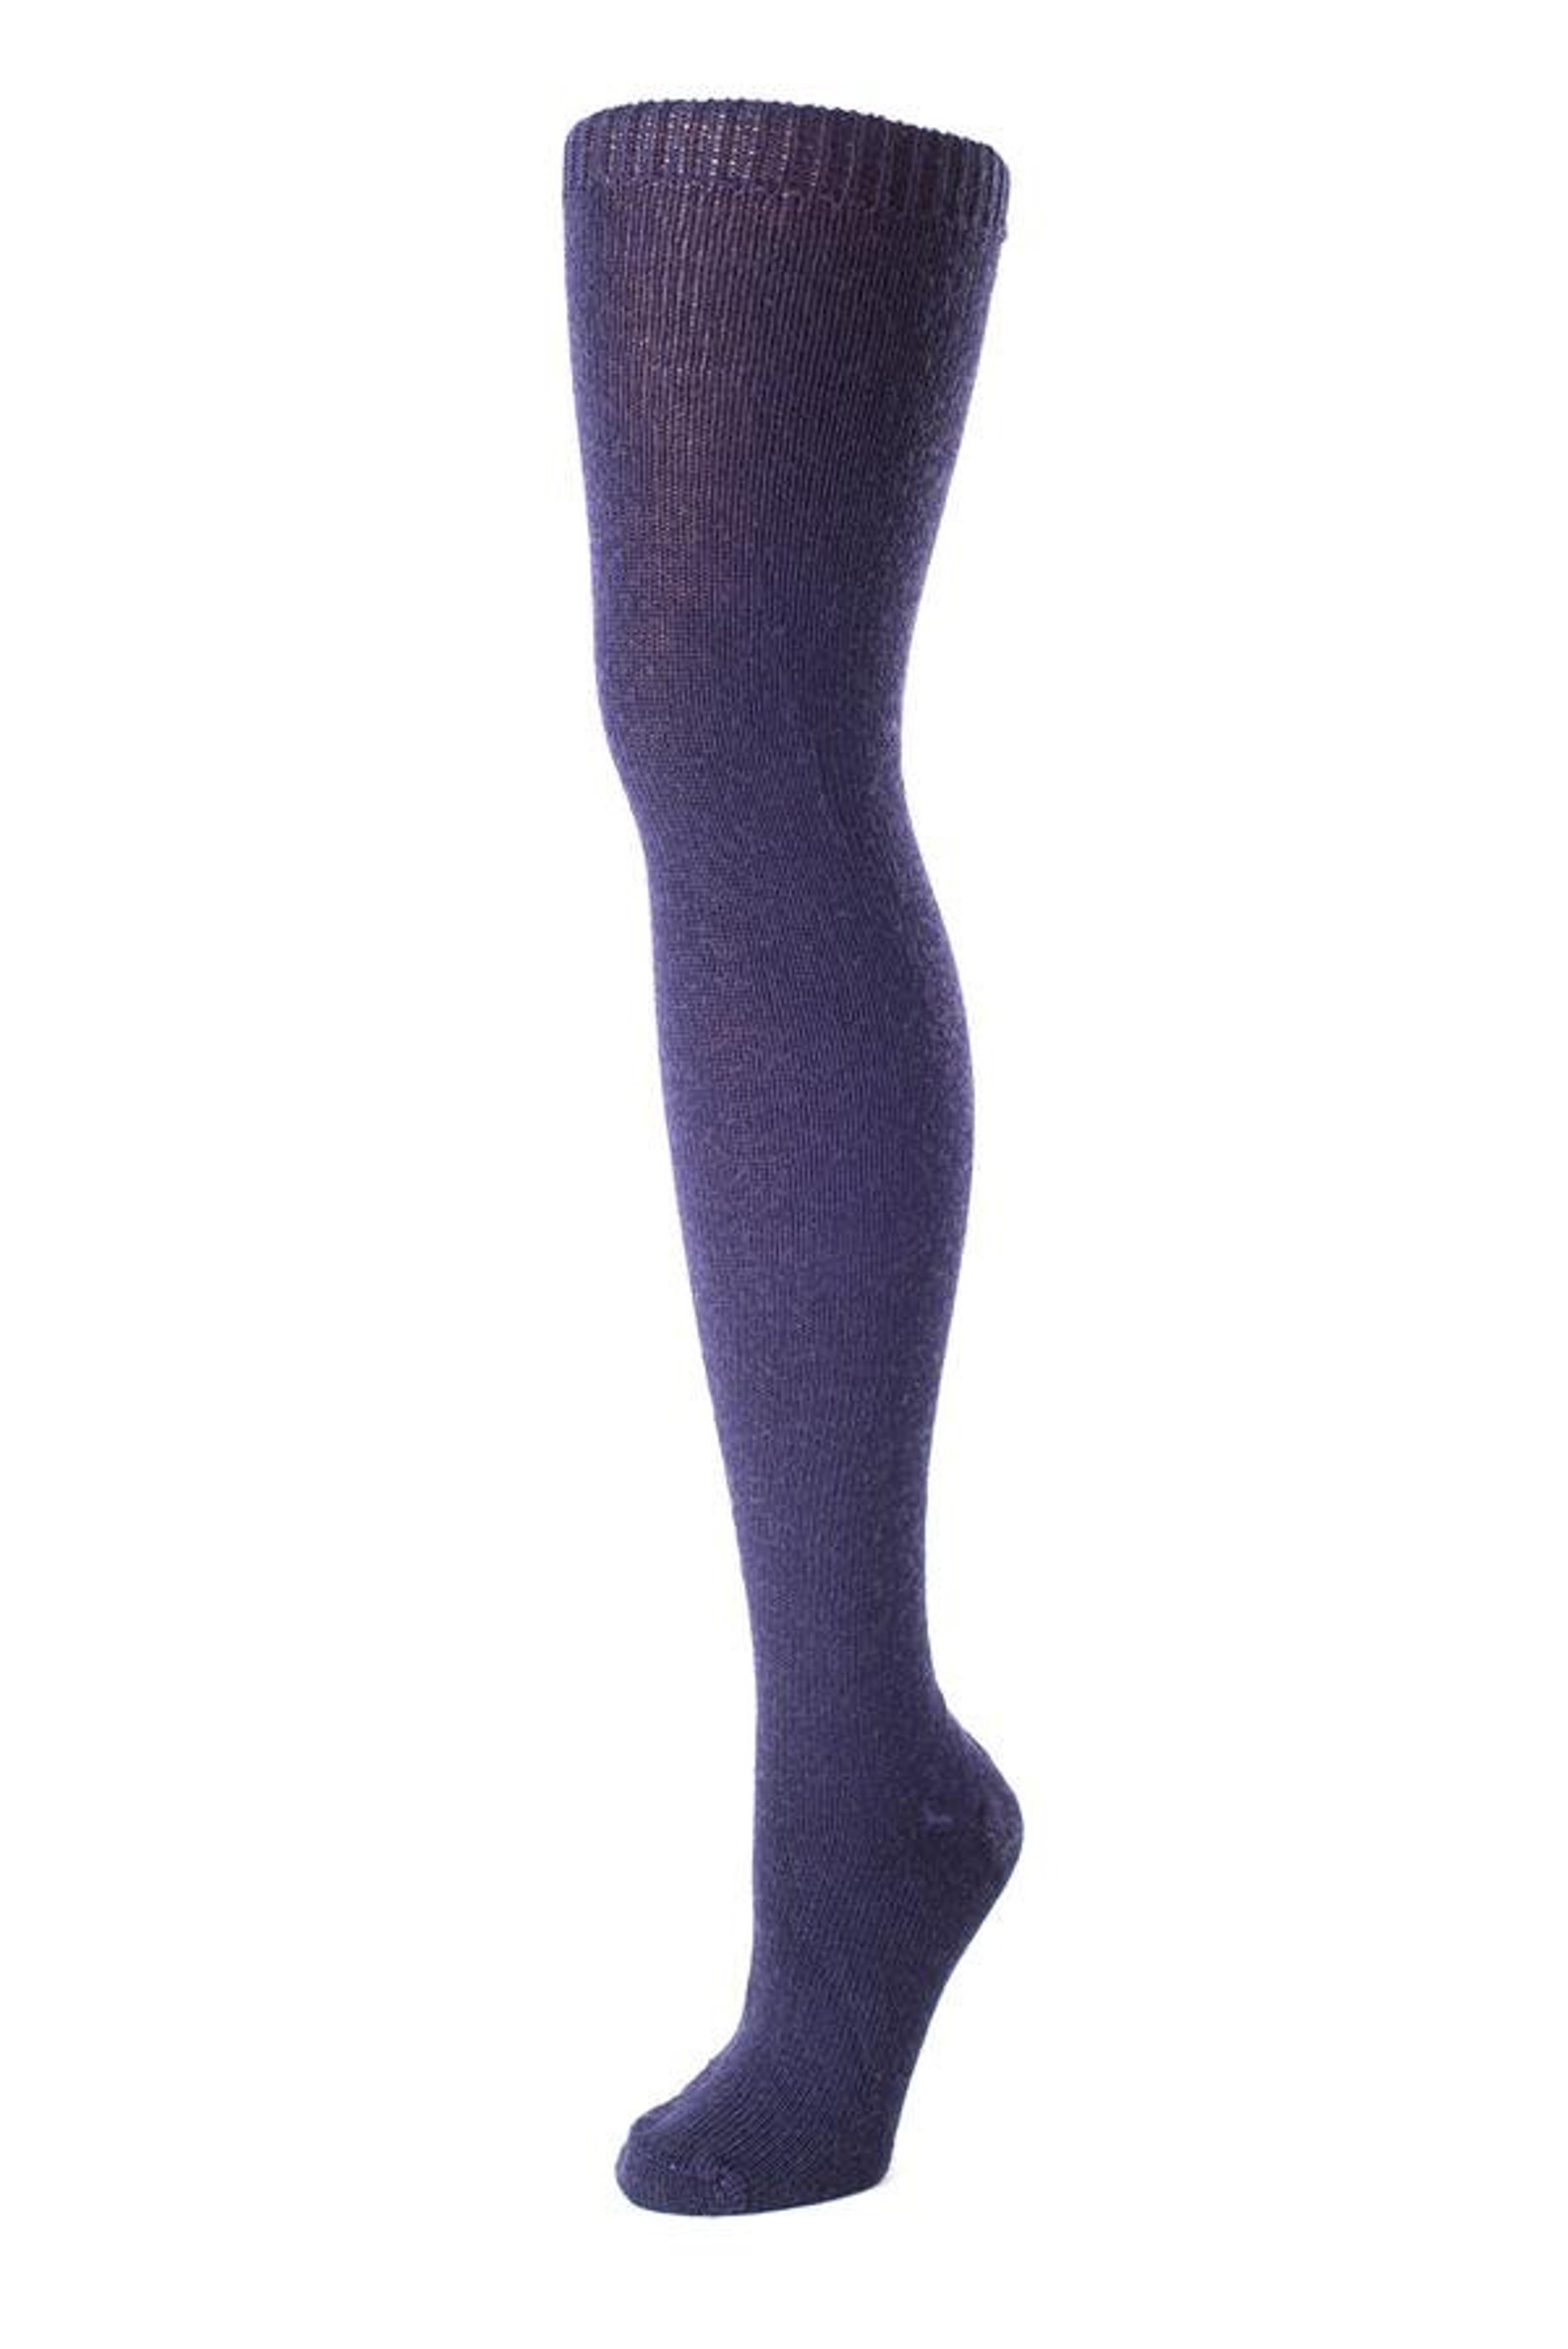 Merino Wool Stockings 100% Wool Thigh High Socks | Etsy